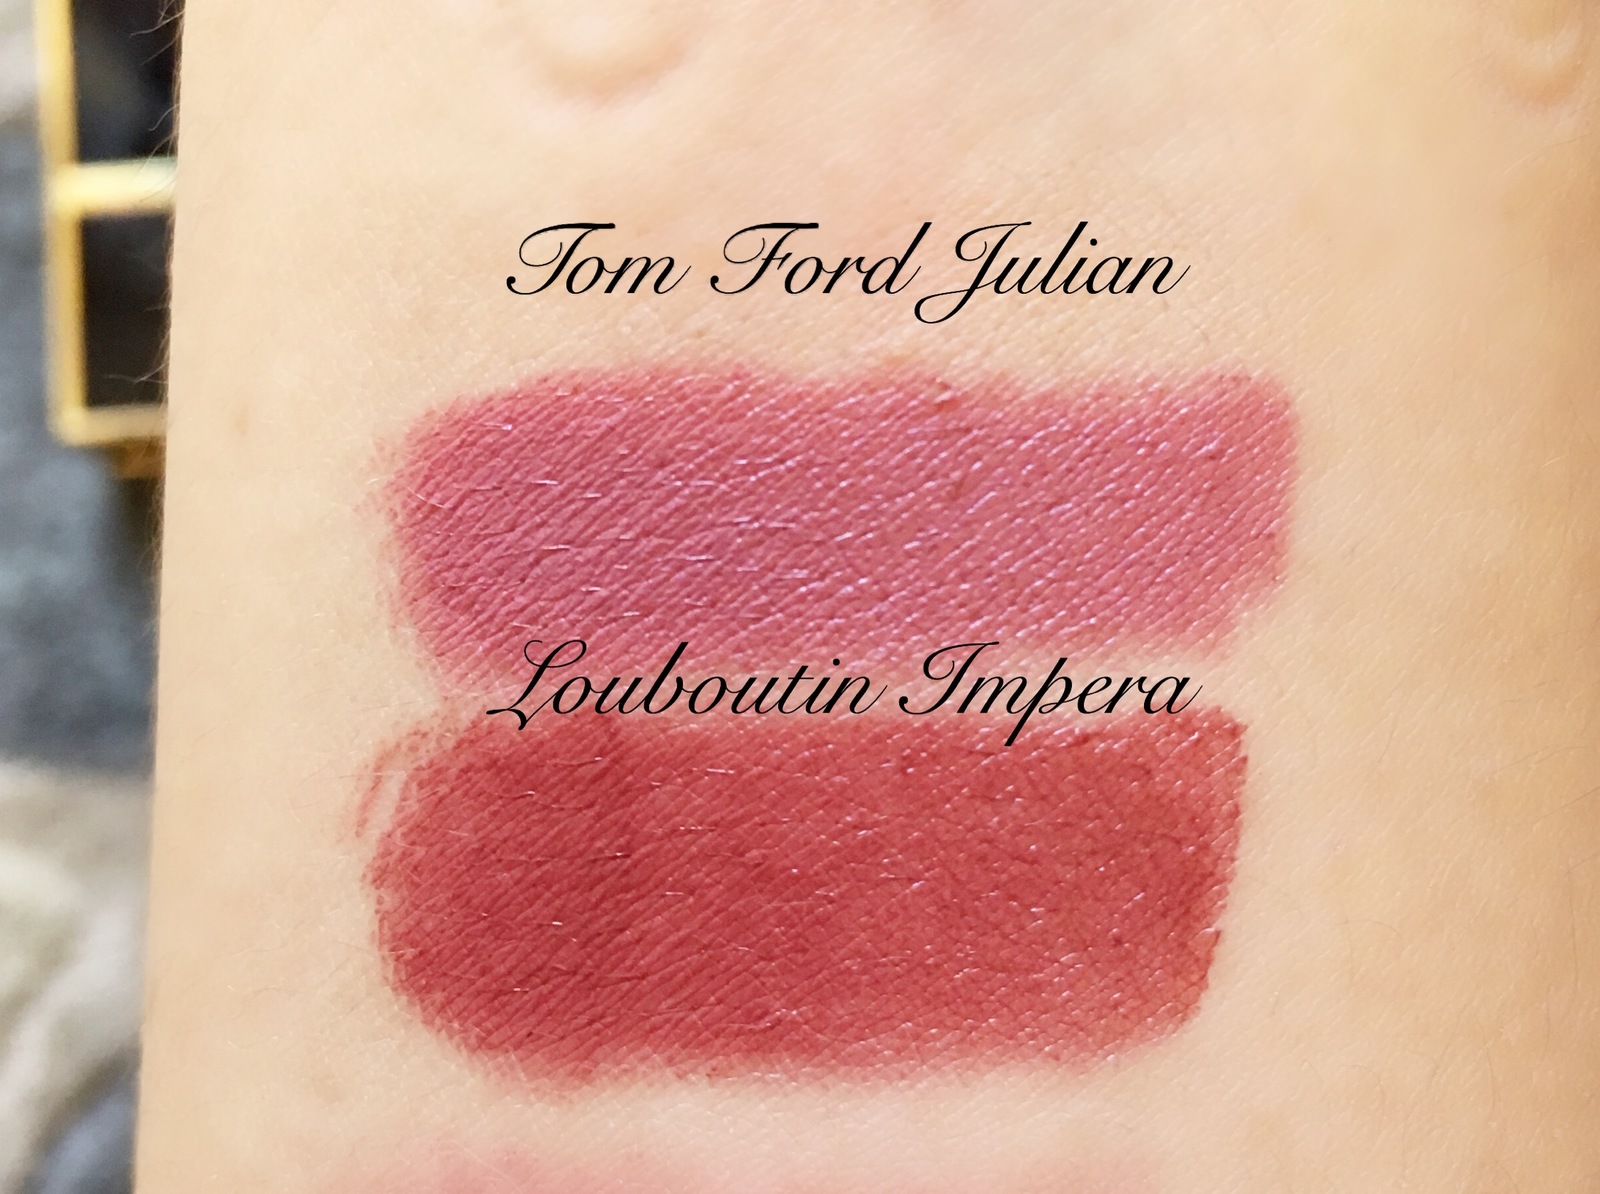 Christian Louboutin Lipsticks - Impera & Just Nothing